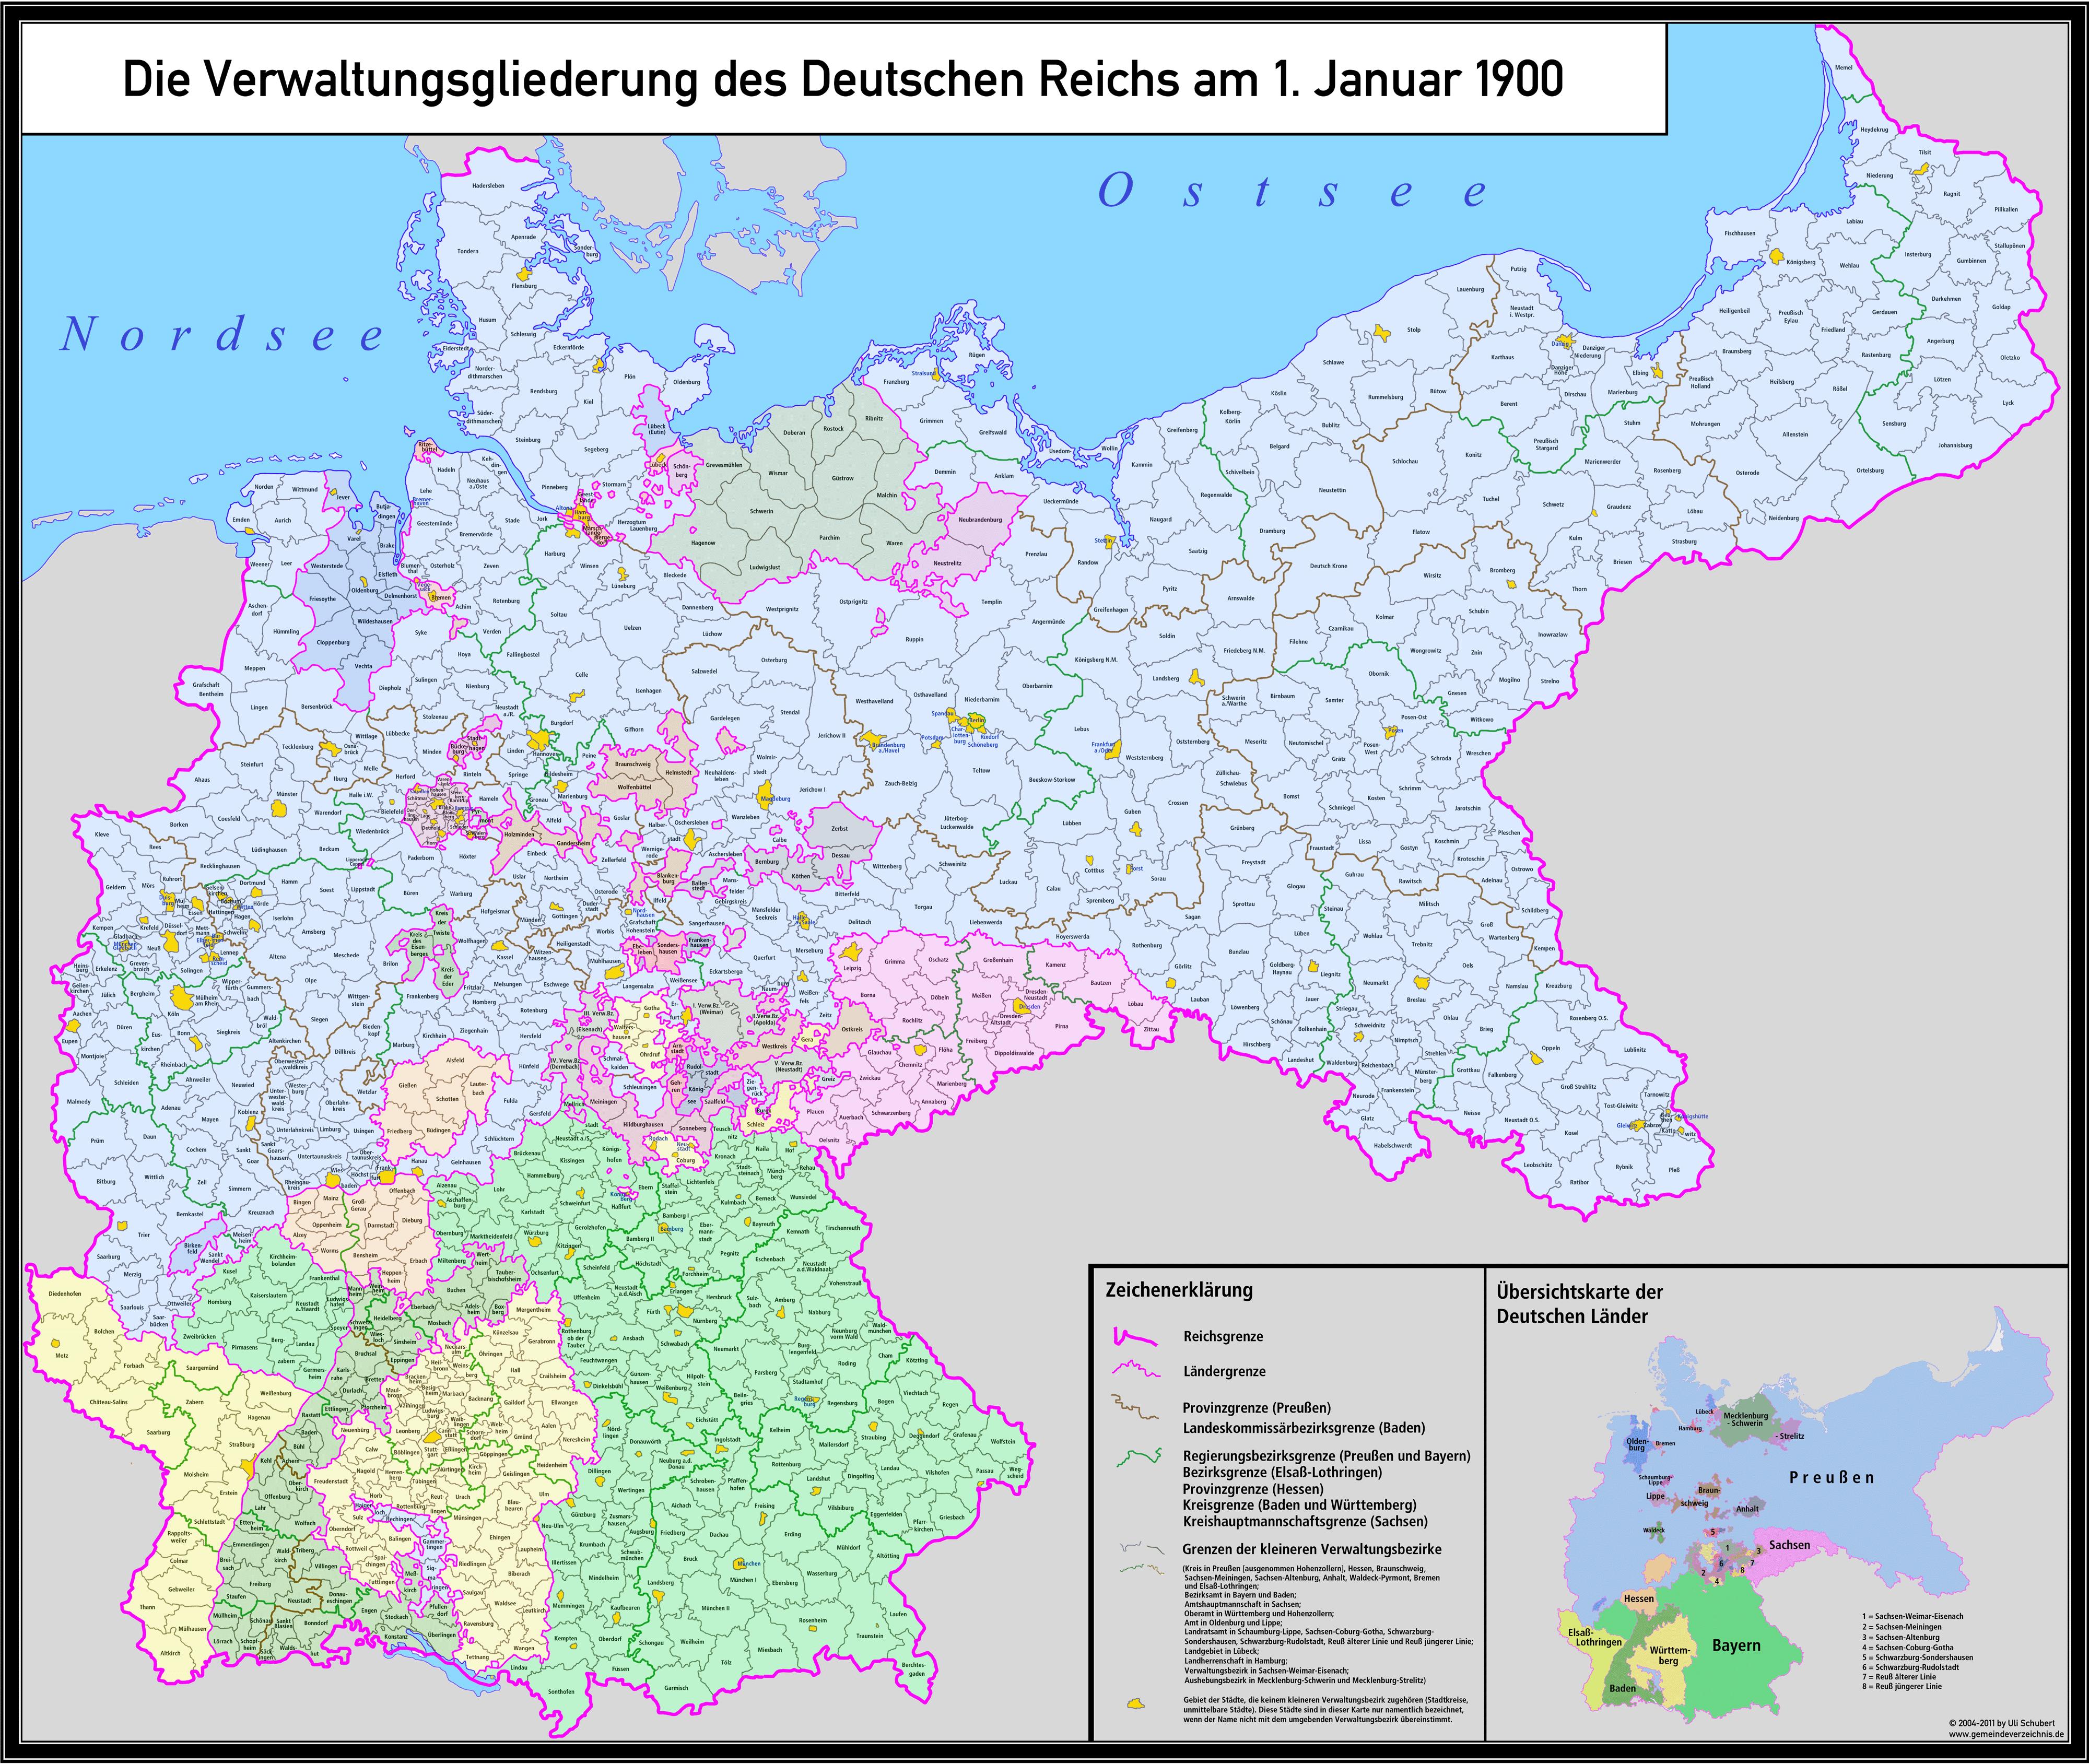 German Empire in 1900